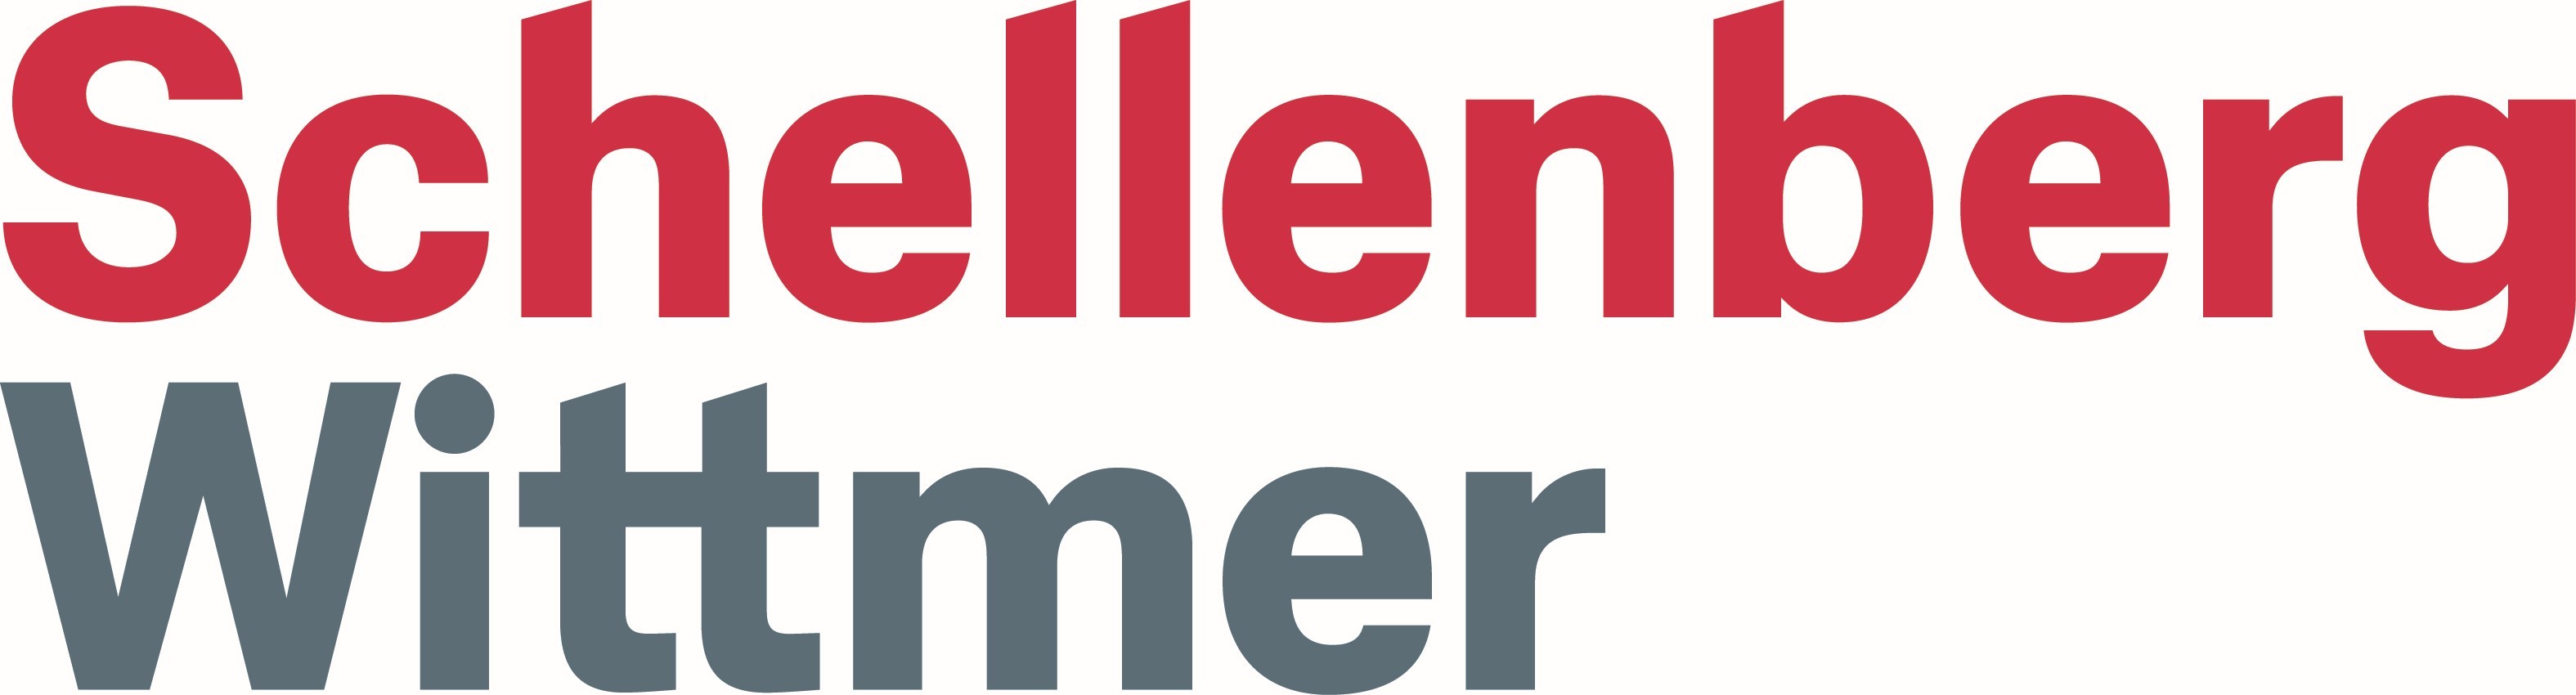 Schellenberg Wittmer Ltd logo